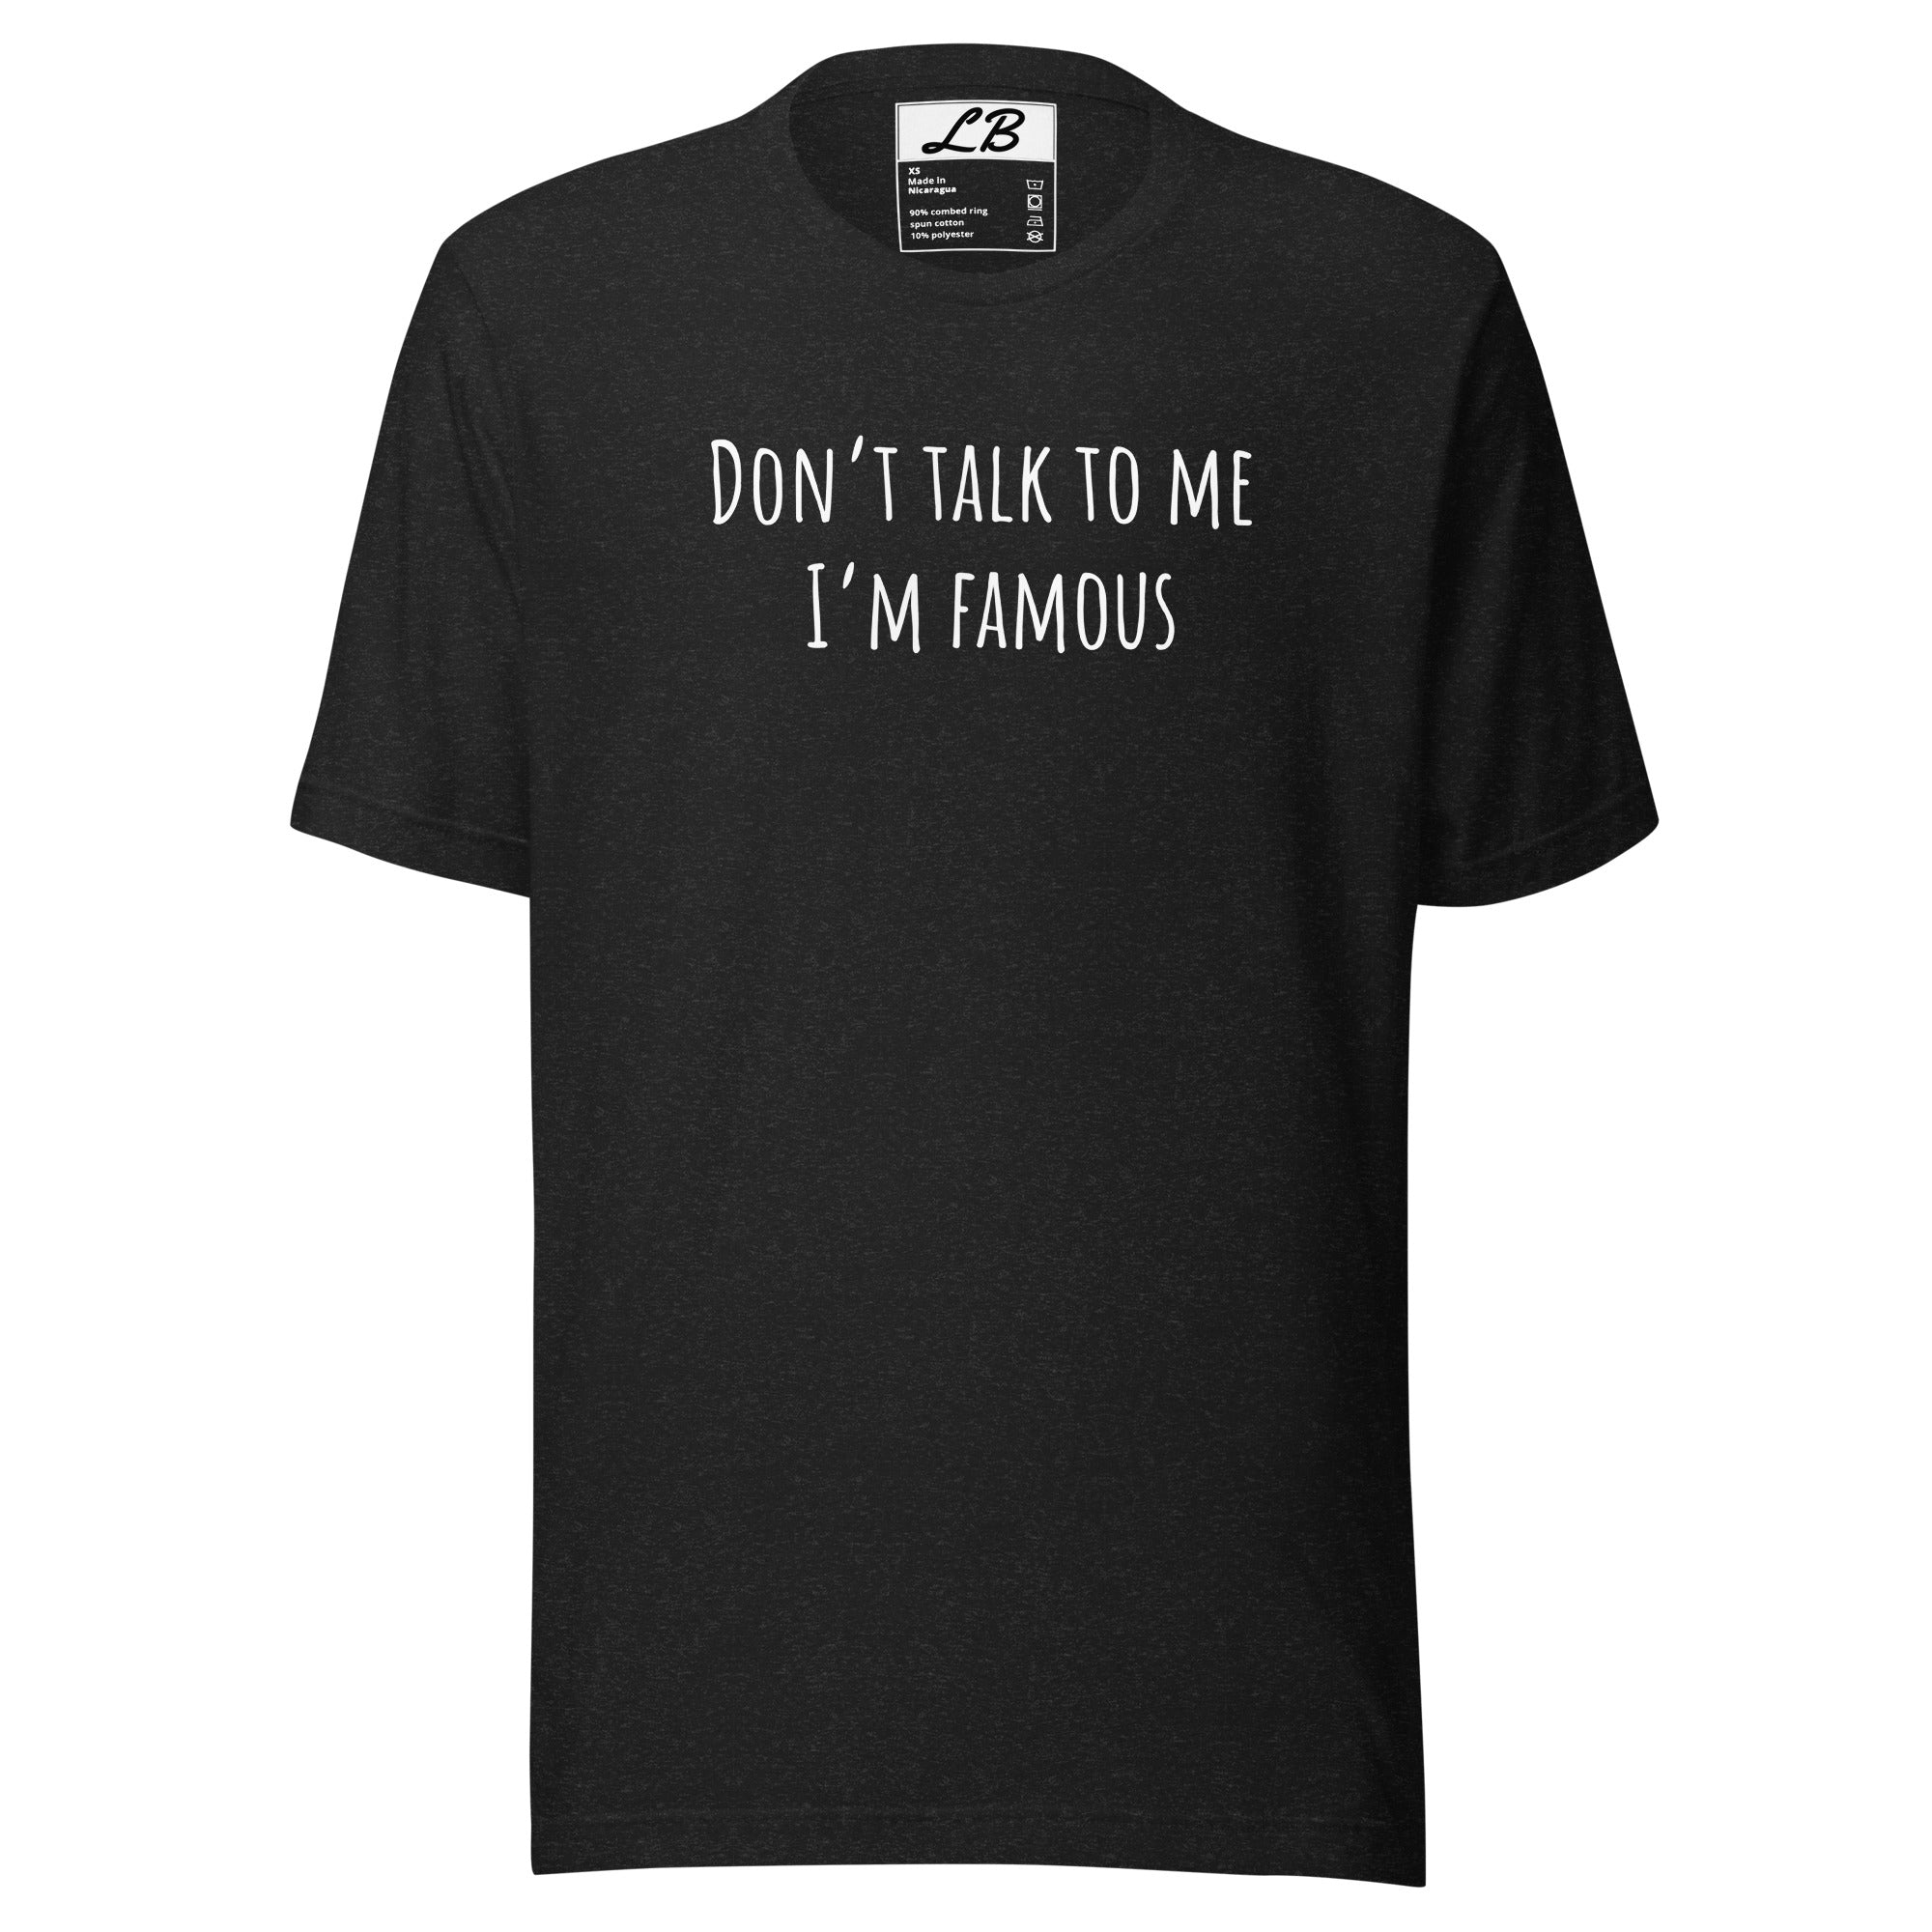 Don't talk to me I'm famous unisex tshirt – Lavoro Blu